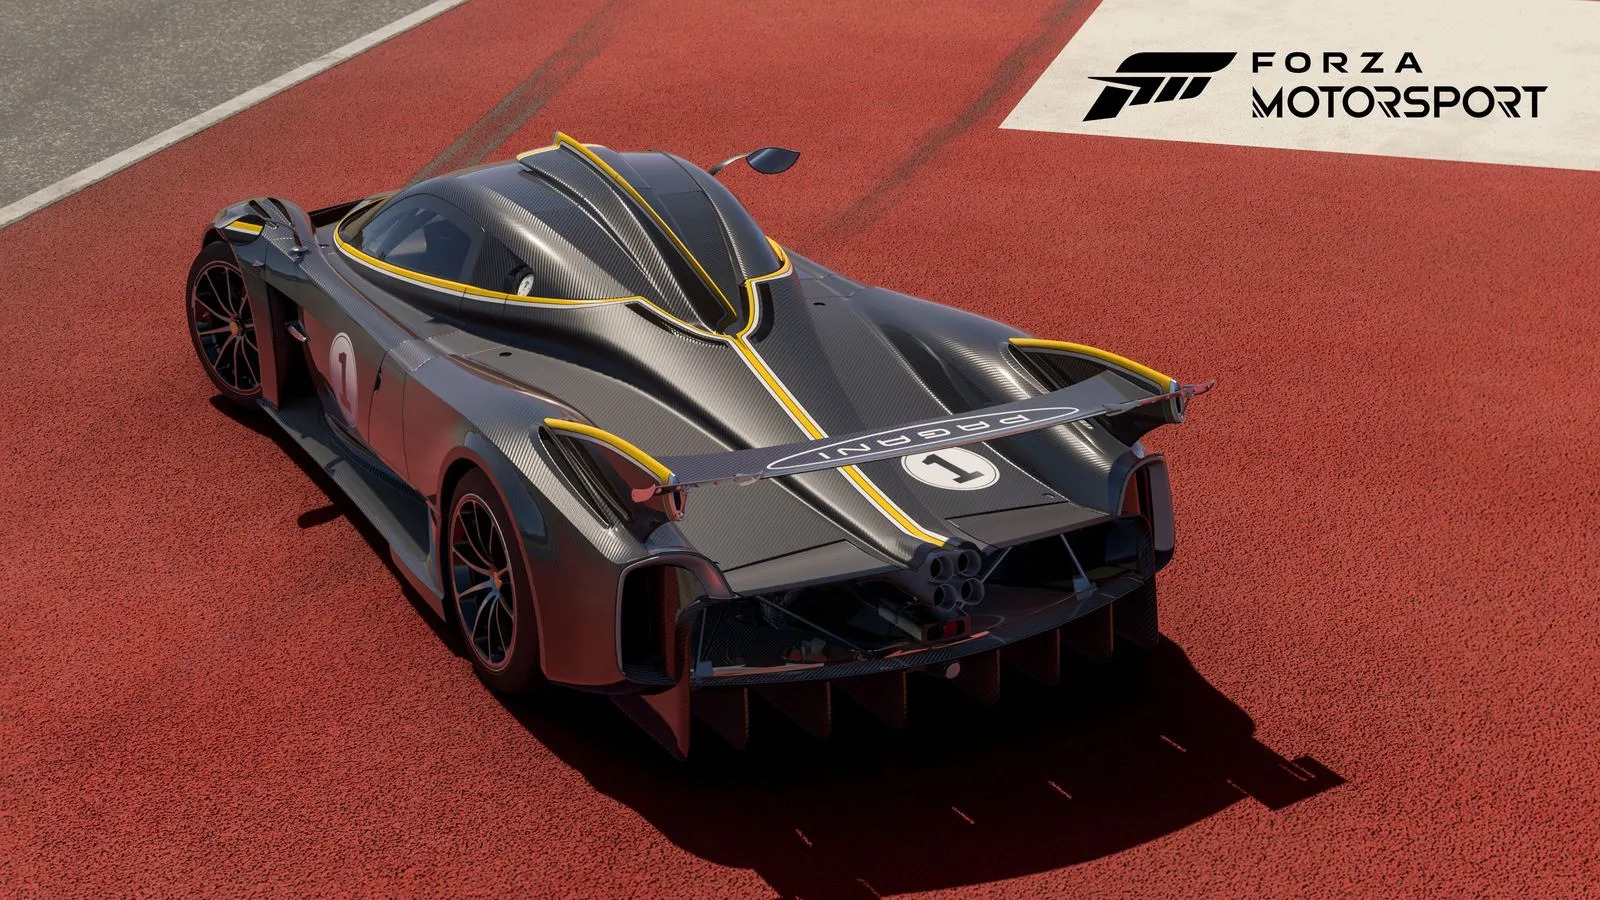 《Forza Motorsport》民间应承在“未来多少个月”改善AI对于手、车辆进度以及角逐纪律